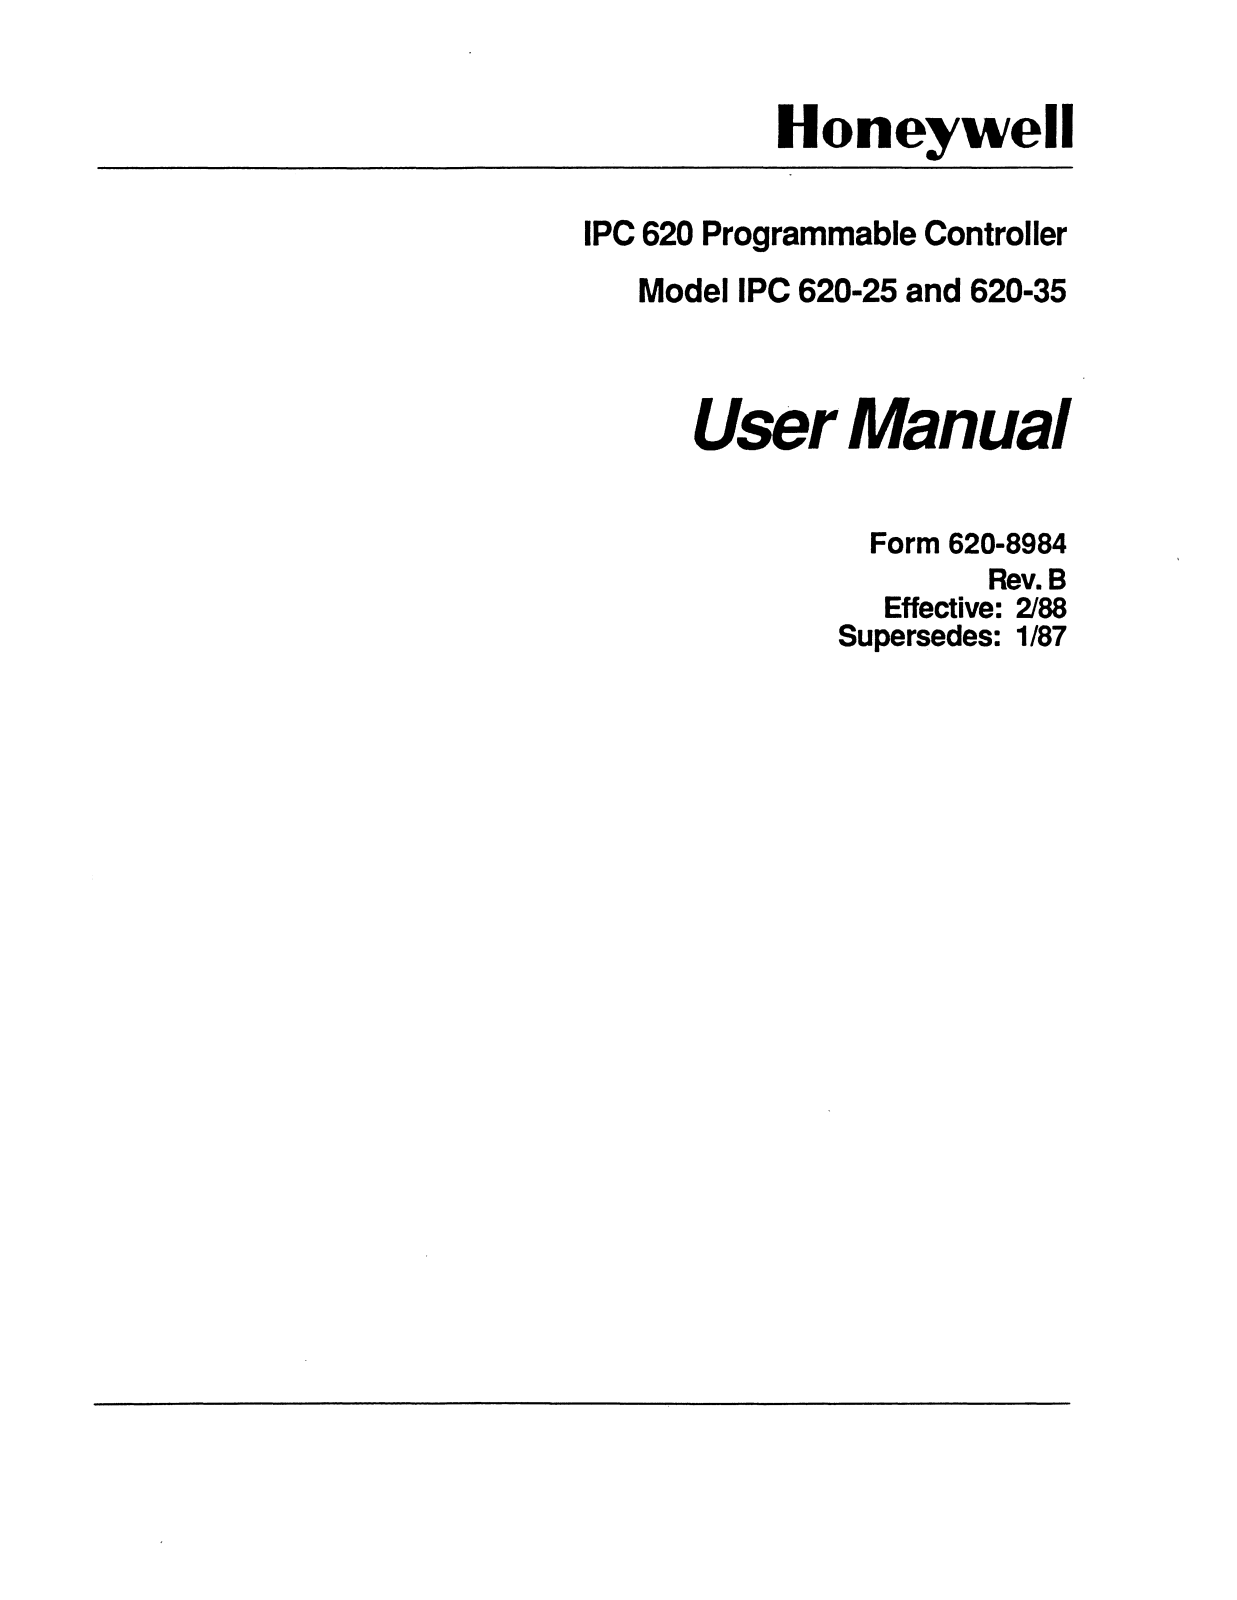 Honeywell IPC 620 User Manual